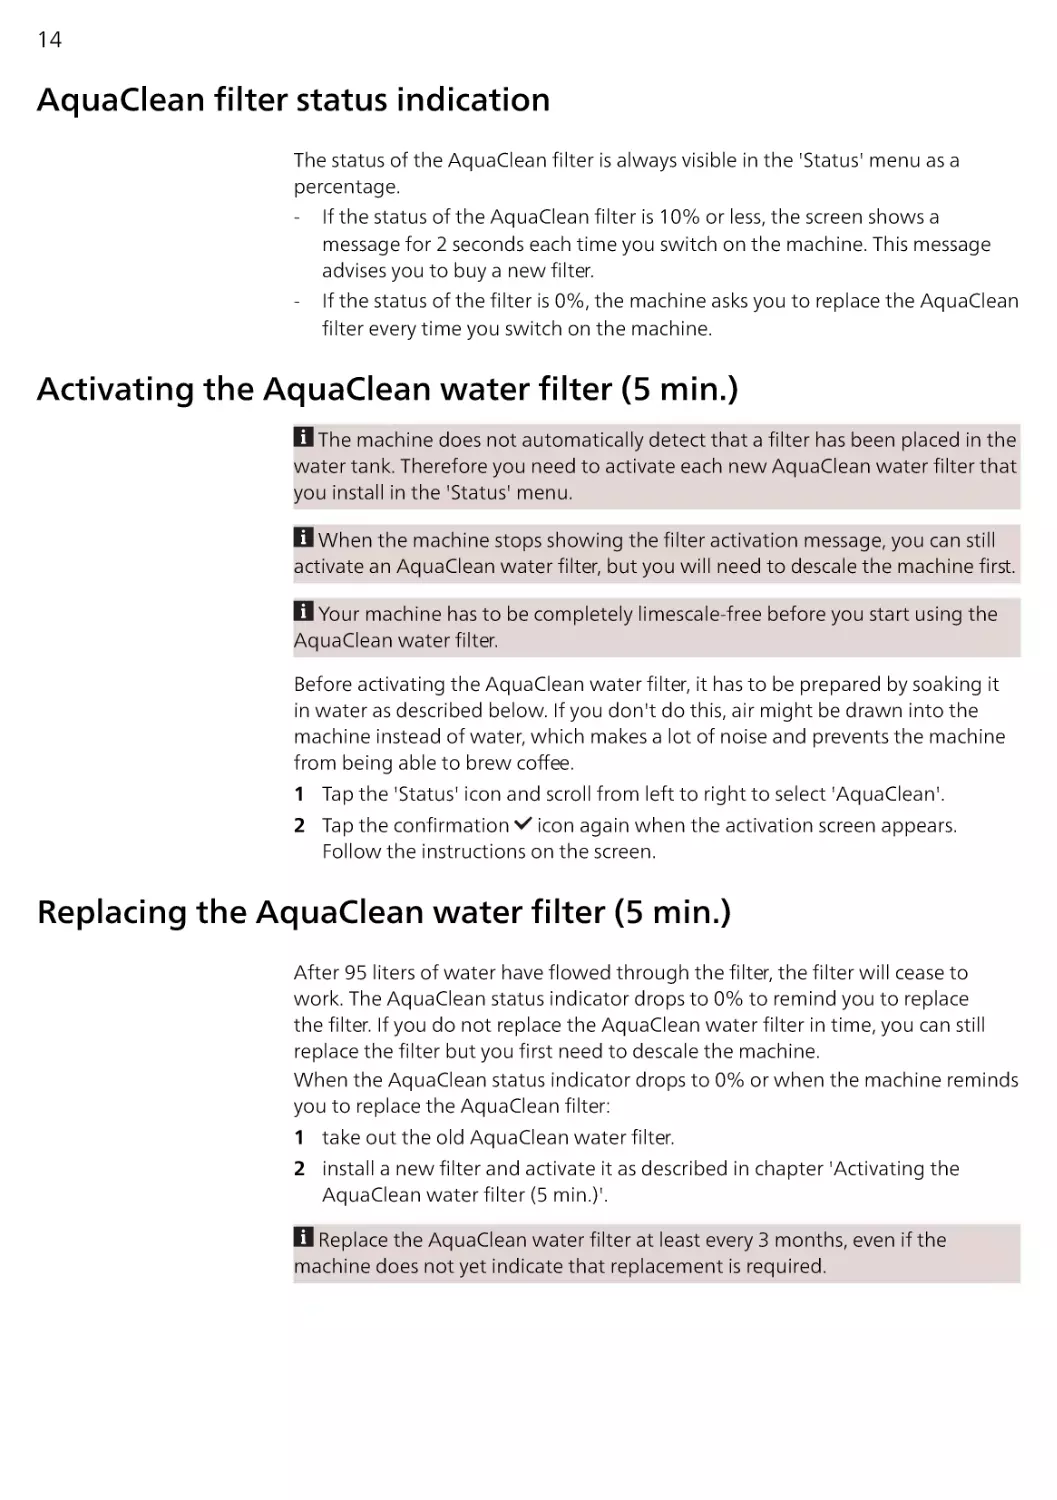 AquaClean filter status indication
Activating the AquaClean water filter (5 min.)
Replacing the AquaClean water filter (5 min.)